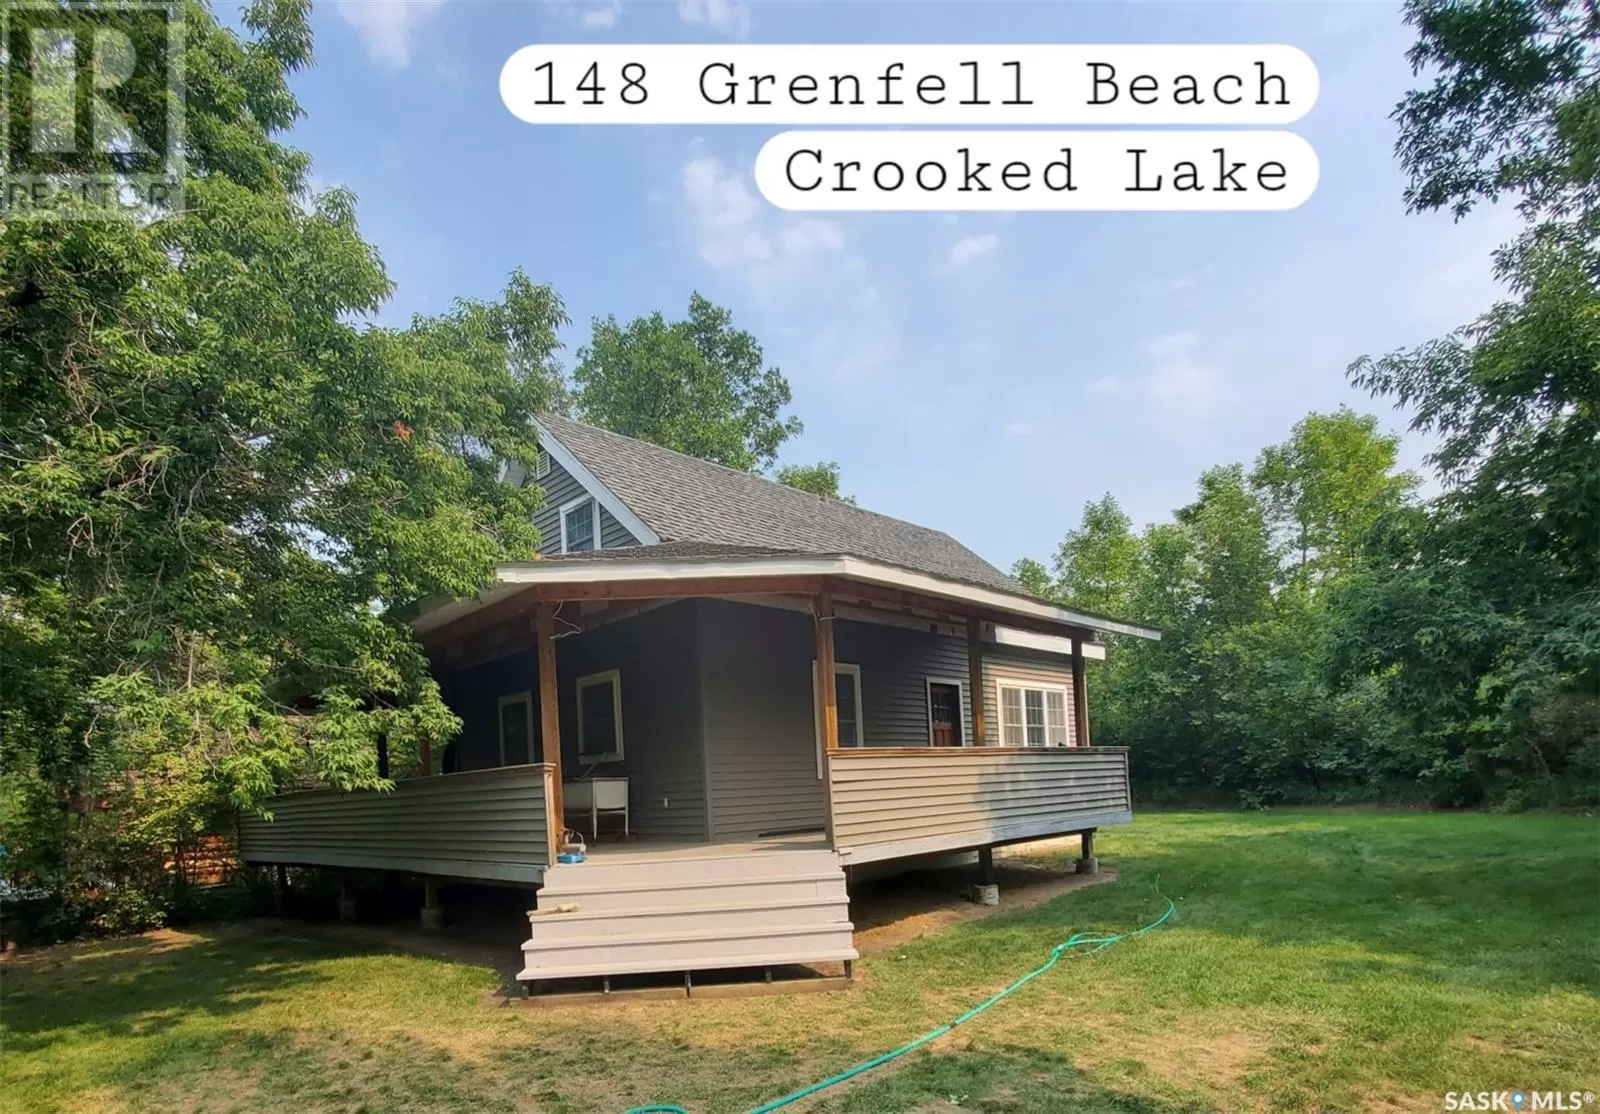 House for rent: 148 Grenfell Beach, Crooked Lake, Saskatchewan S0G 2B0